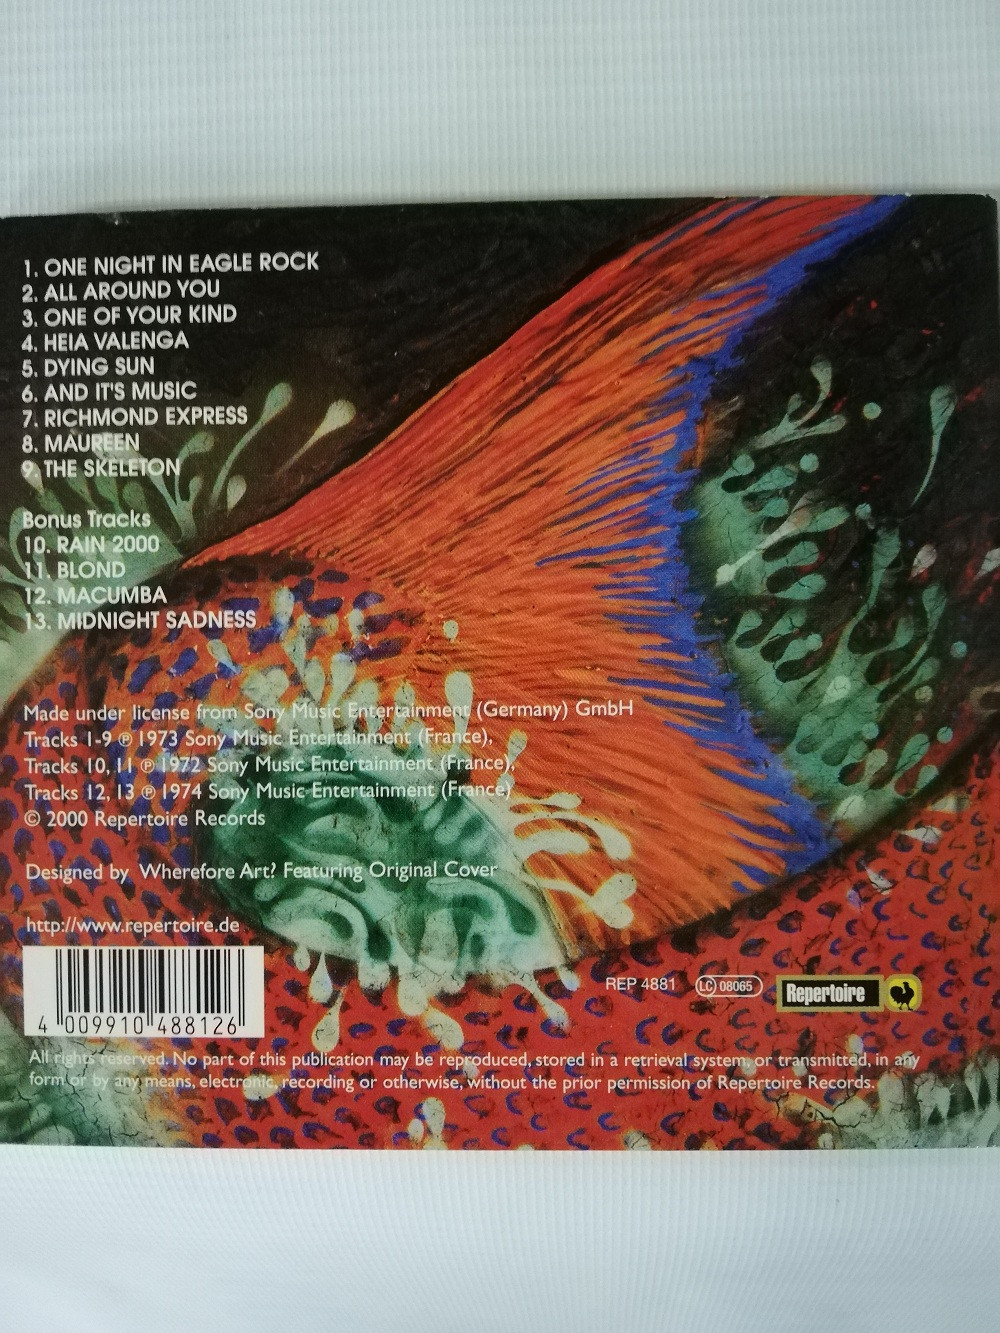 Imagen CD TITANIC - EAGLE ROCK 2